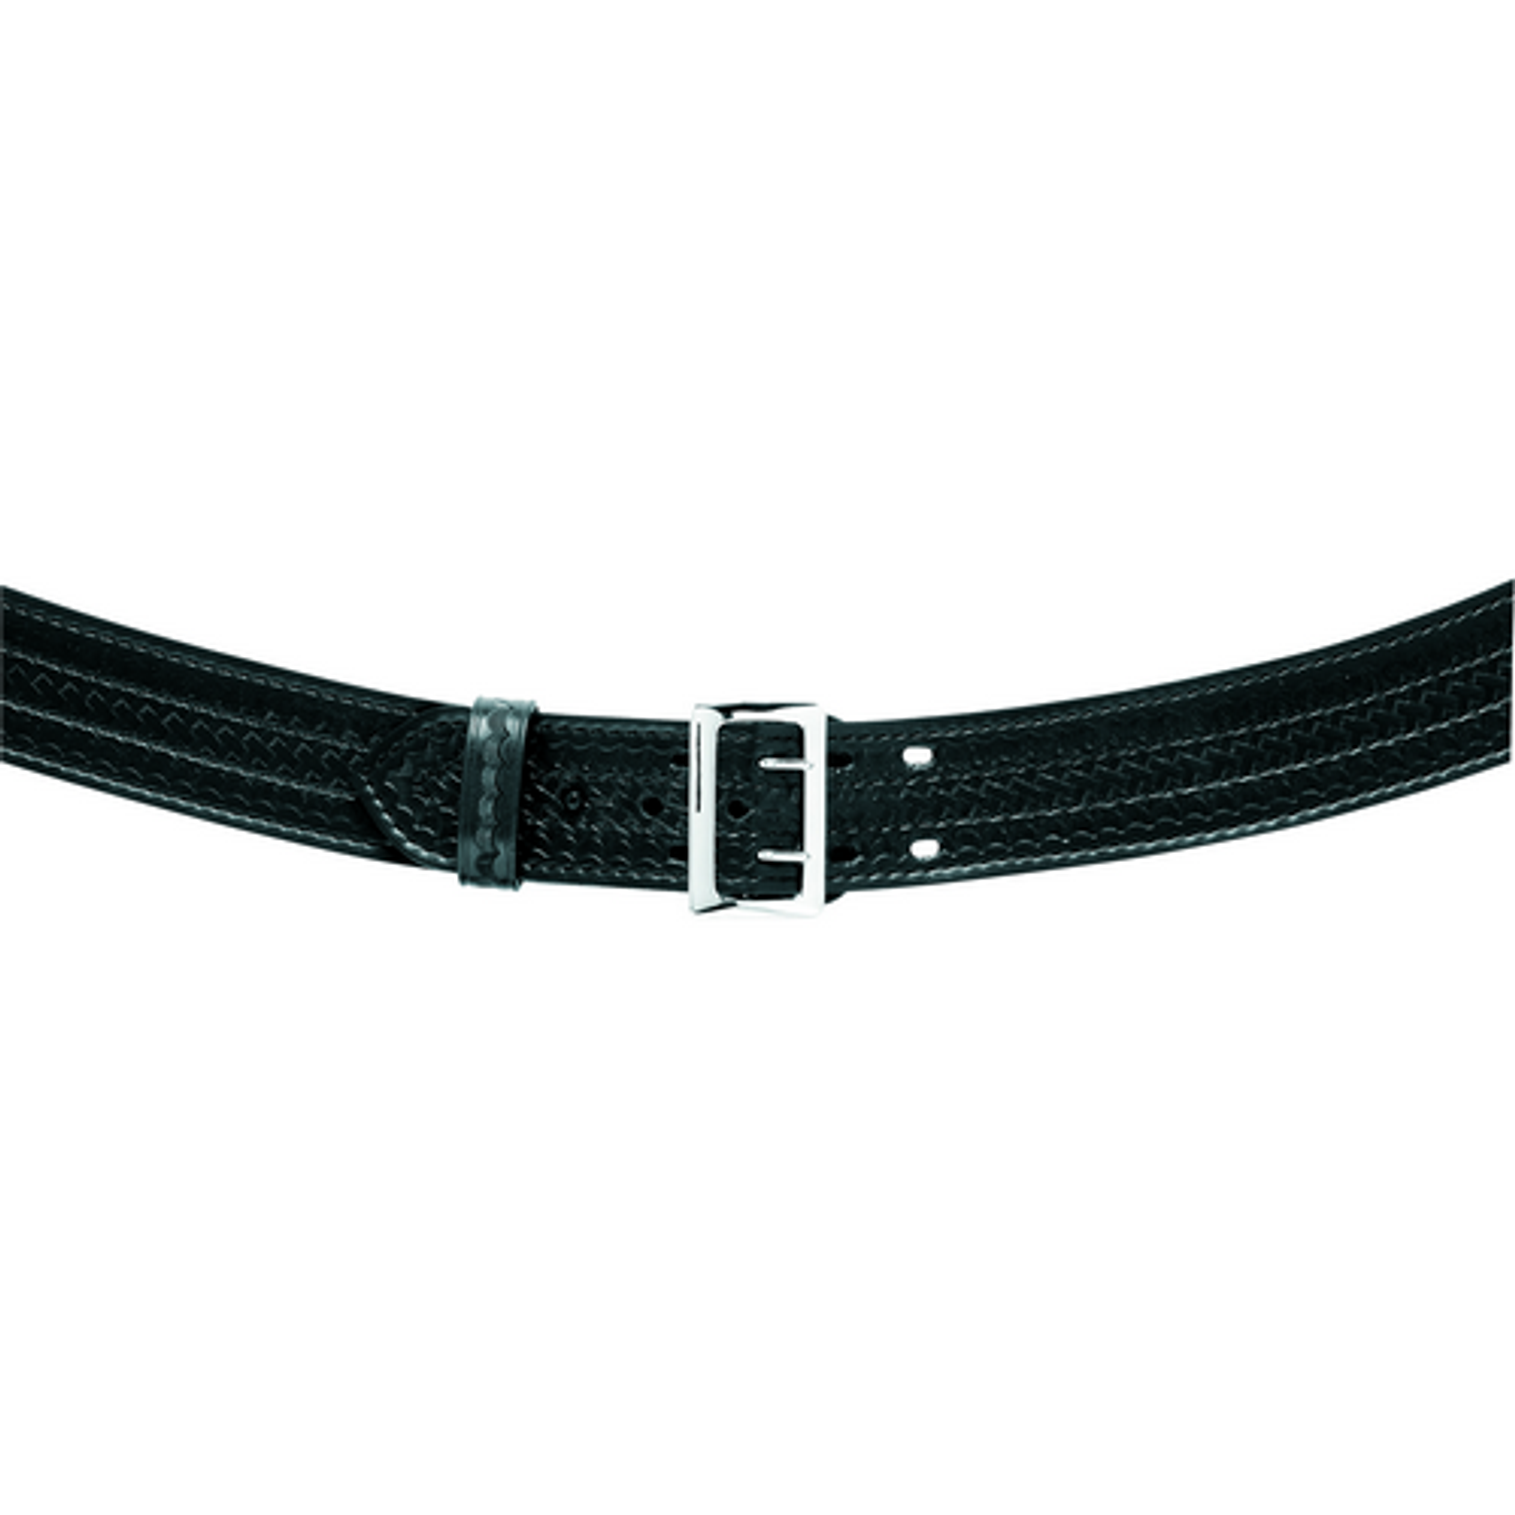 872 - Contoured Duty Belt, Suede Lined, 2.25 (58mm) - KR872-44-6